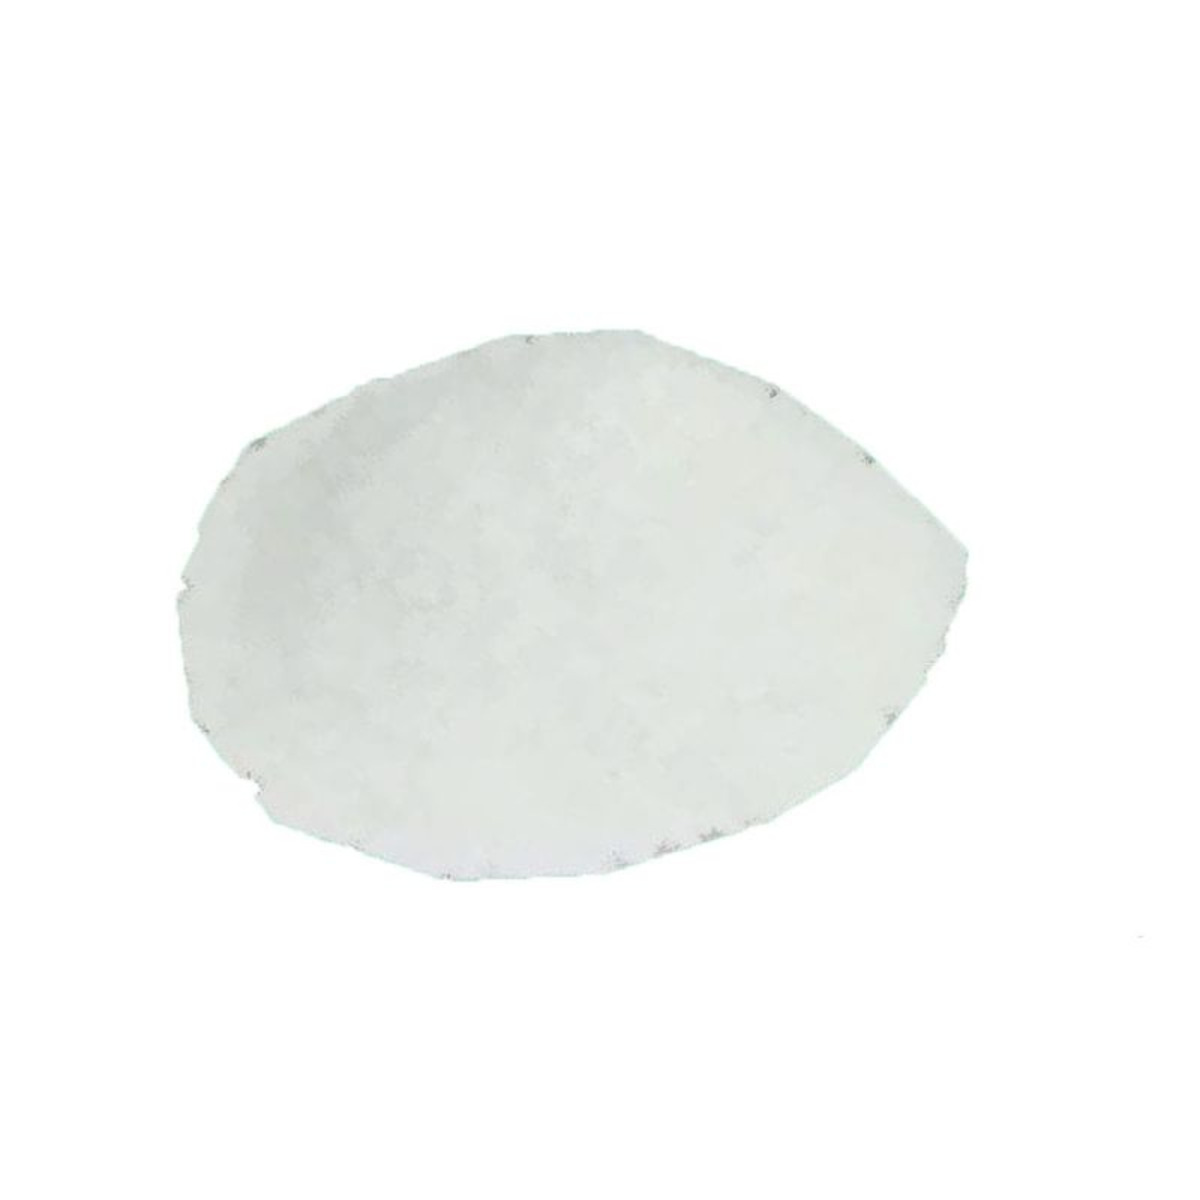 M2 Fishing Plastgum Powder Plasticizer For Ballast -  Phosphorescent White - 100 g        